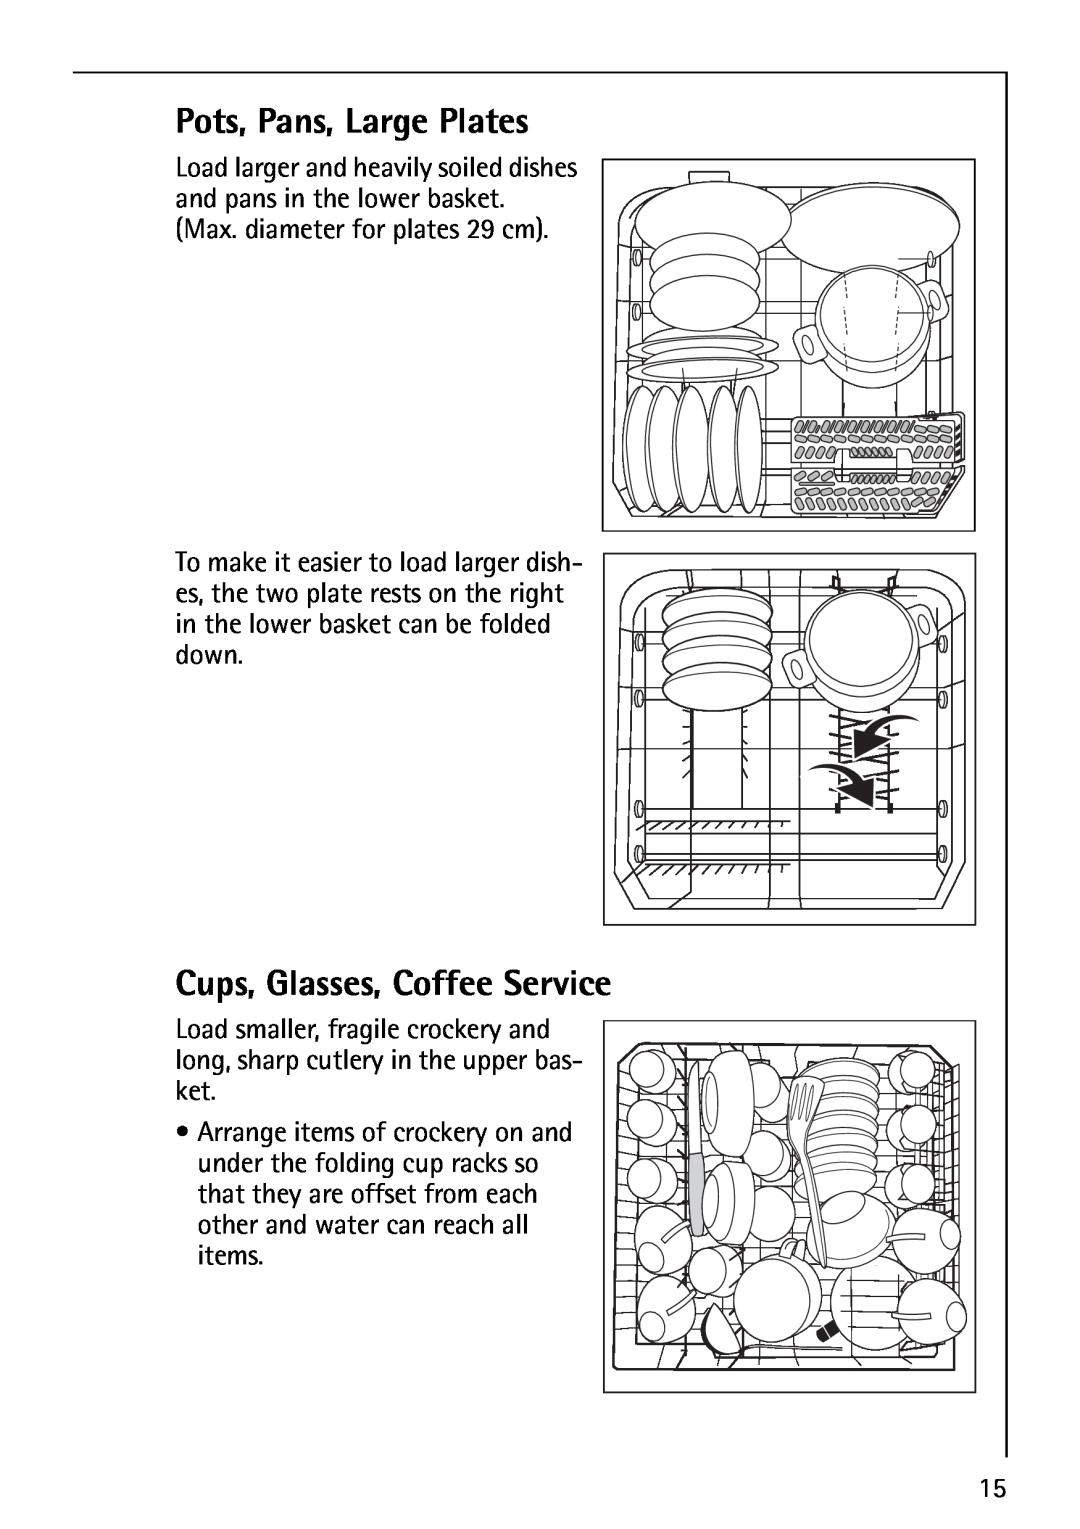 AEG 40860 manual Pots, Pans, Large Plates, Cups, Glasses, Coffee Service 